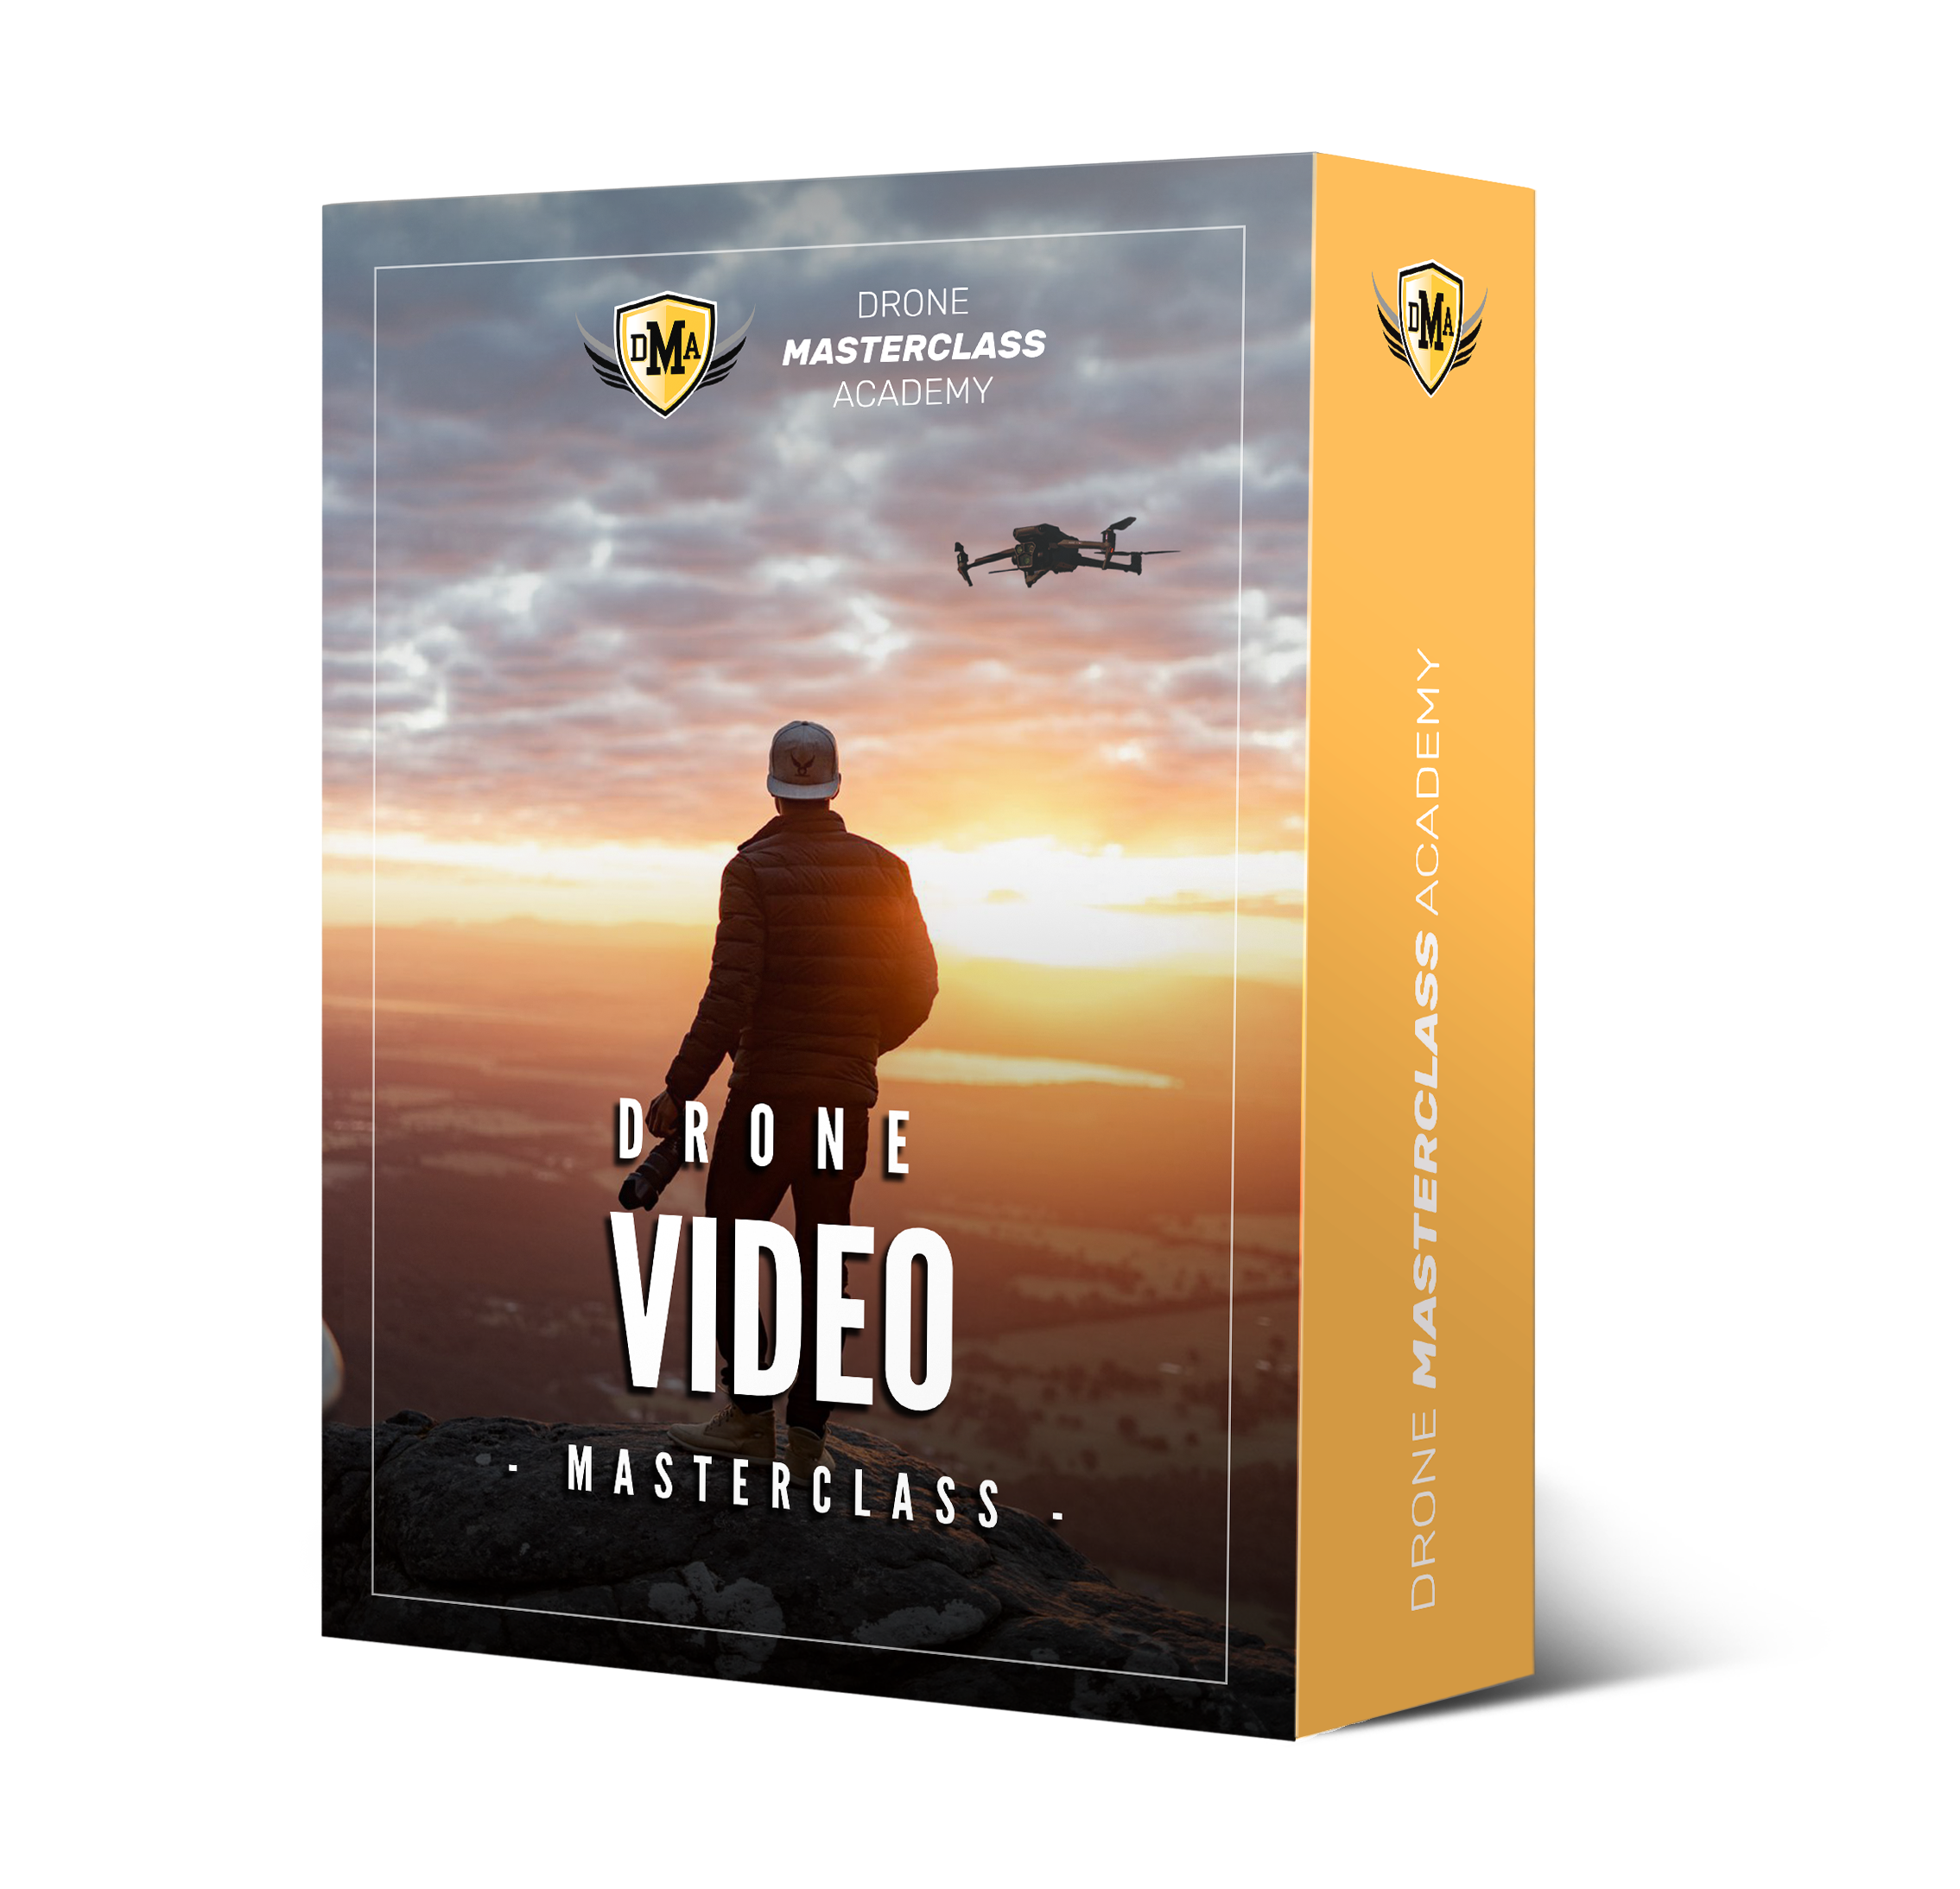 Drone Video Masterclass course